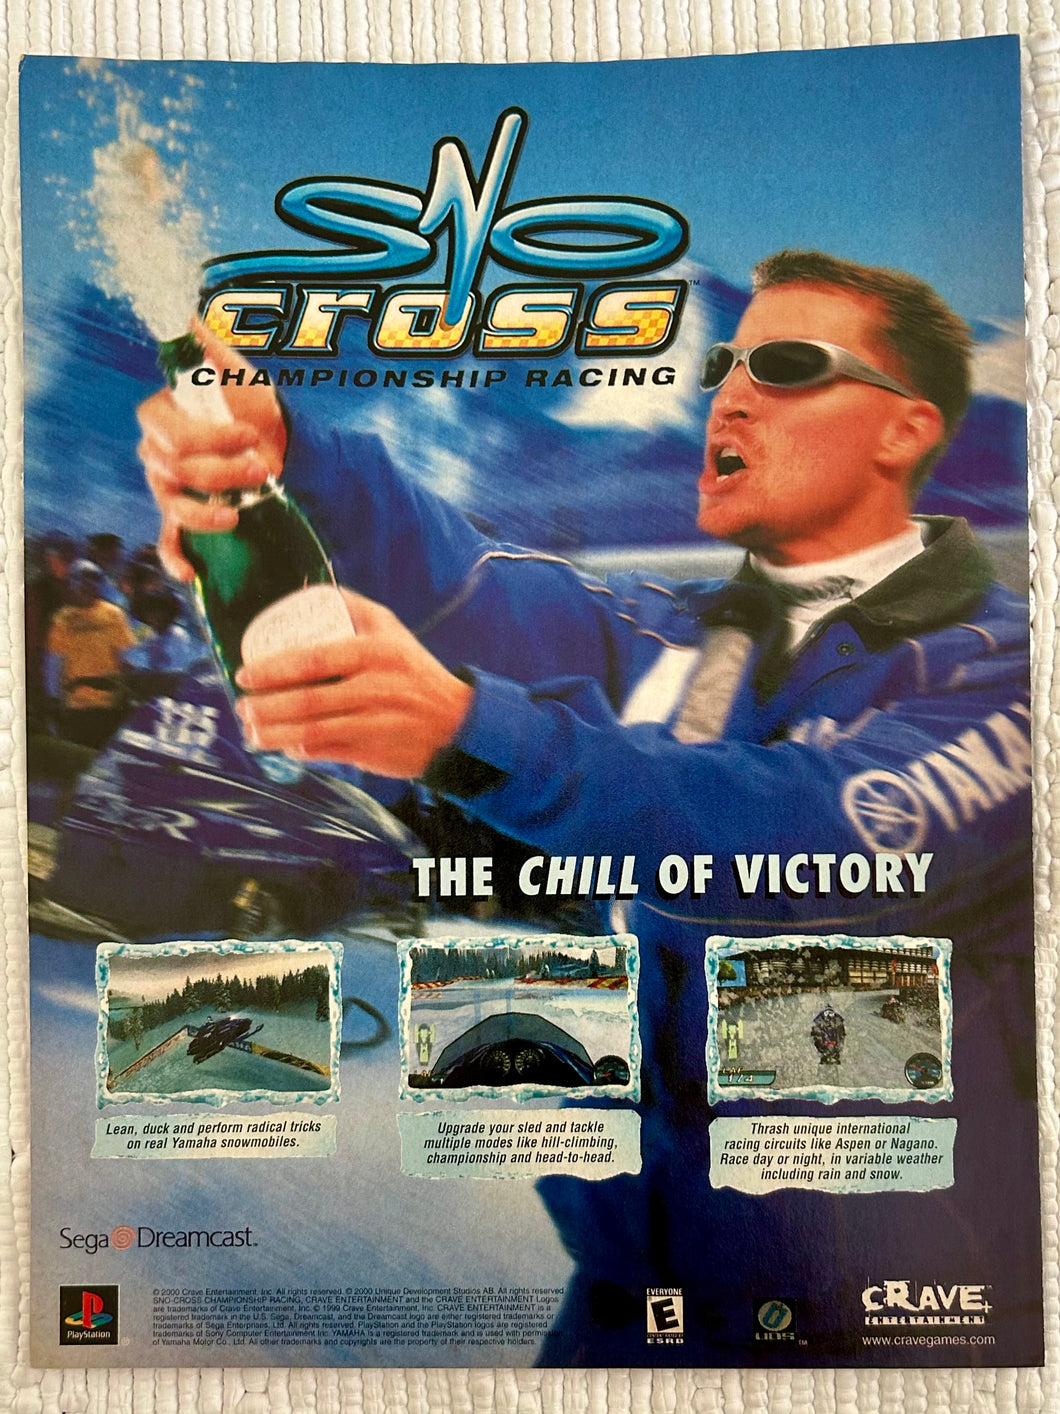 Sno-Cross Championship Racing - Dreamcast - Original Vintage Advertisement - Print Ads - Laminated A4 Poster